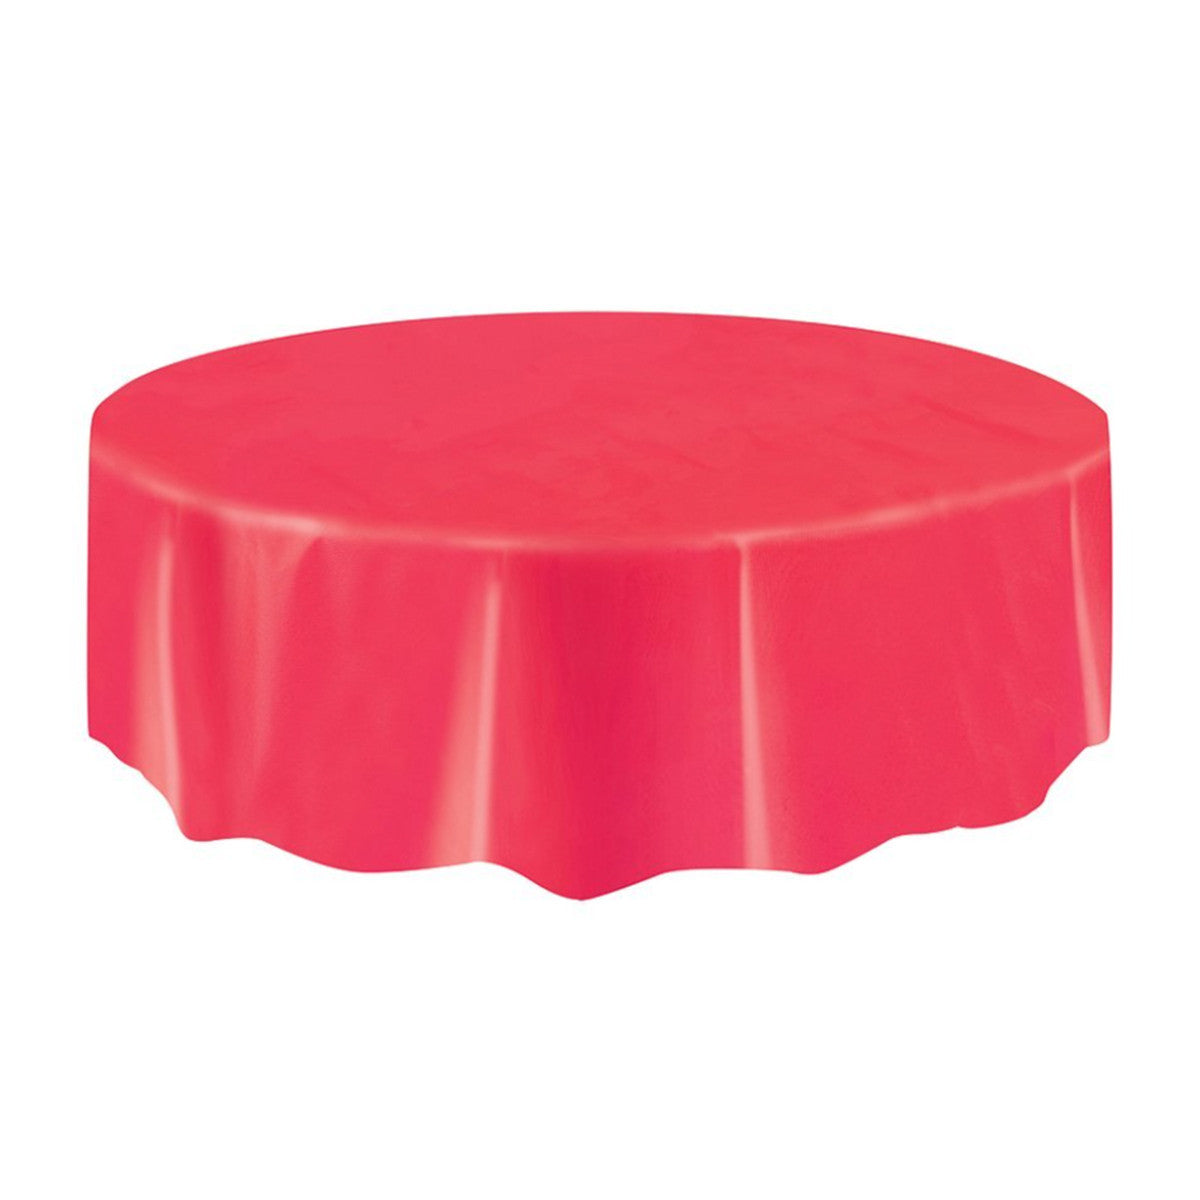 Allgala Table Cover 12-PK Premium Medium Duty Disposable 84" Round Plastic Tablecloth